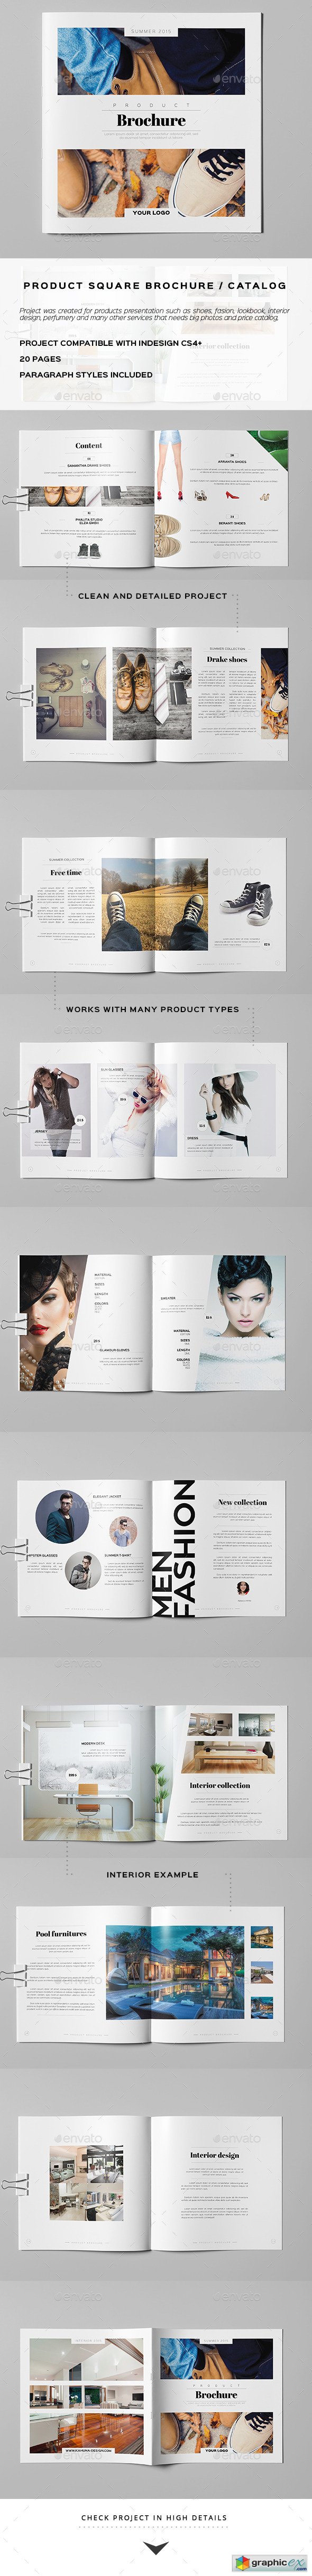 Product Square Brochure / Catalog